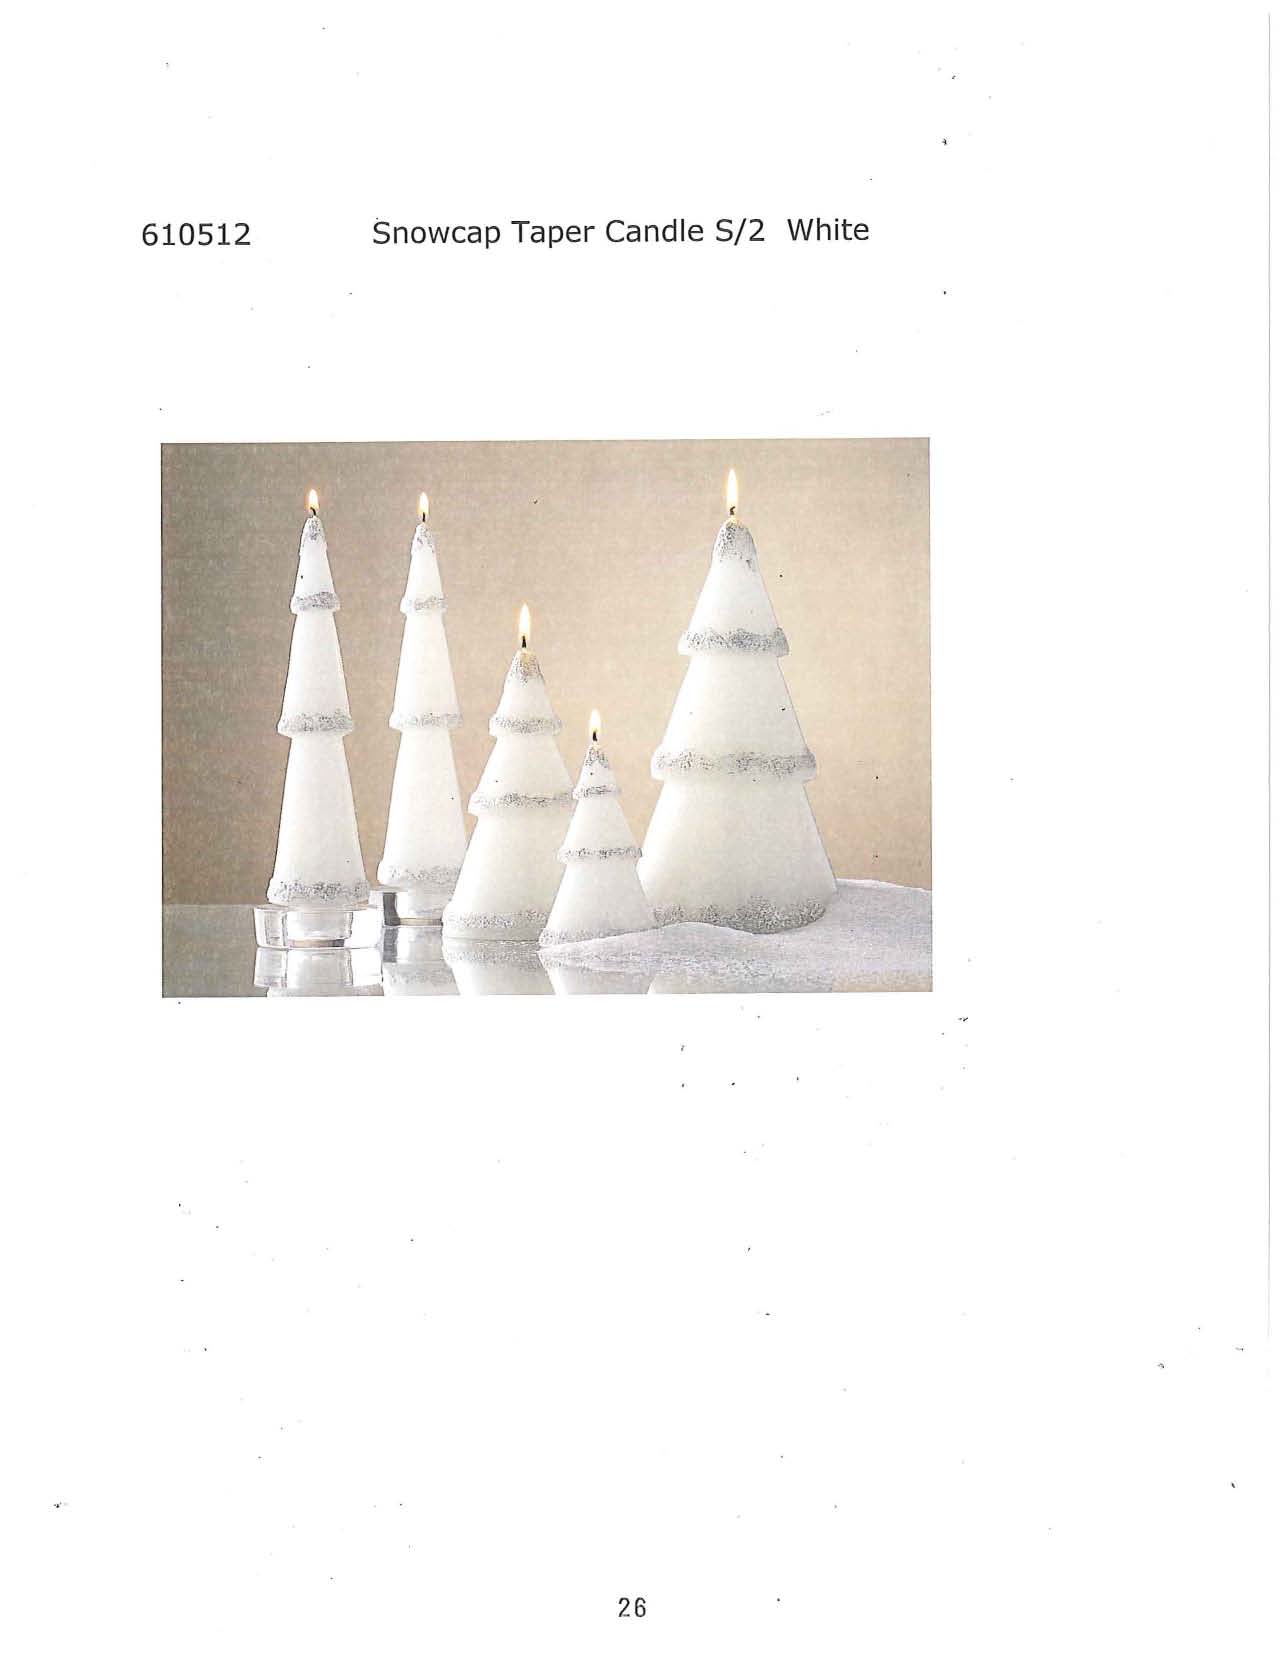 Snowcap Taper Candle s/2 - White